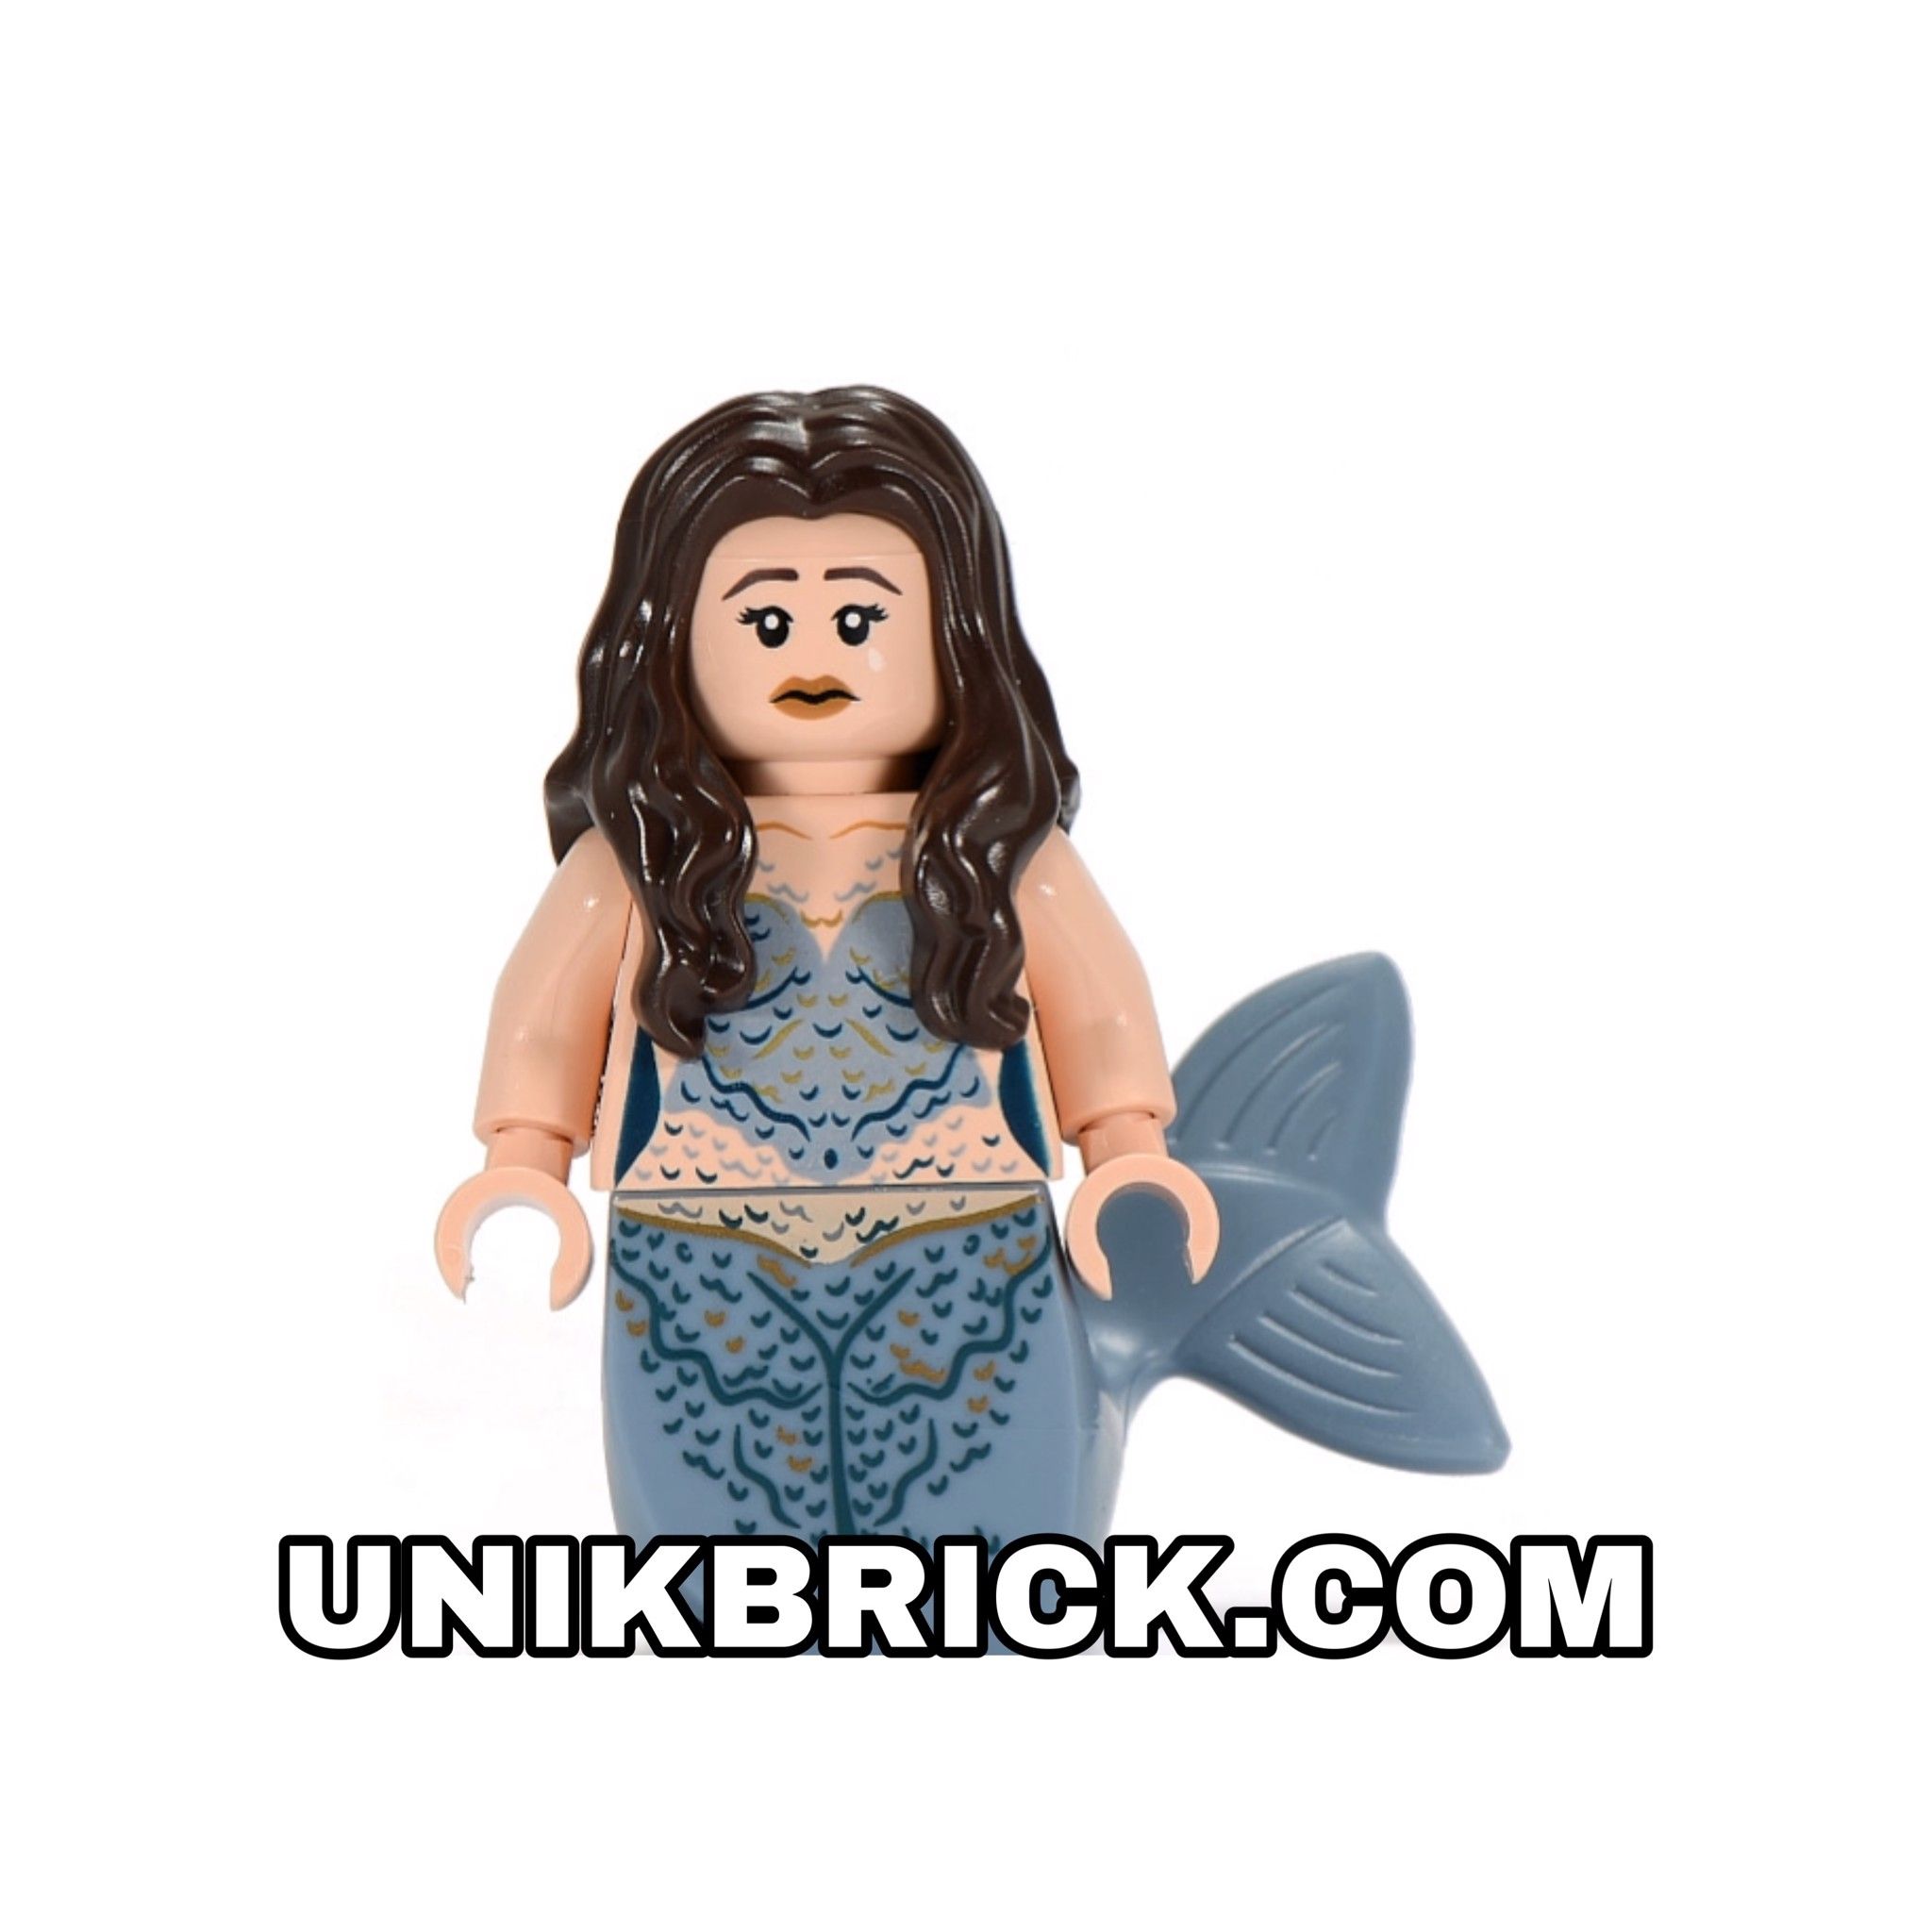 [ORDER ITEMS] LEGO Mermaid Syrena